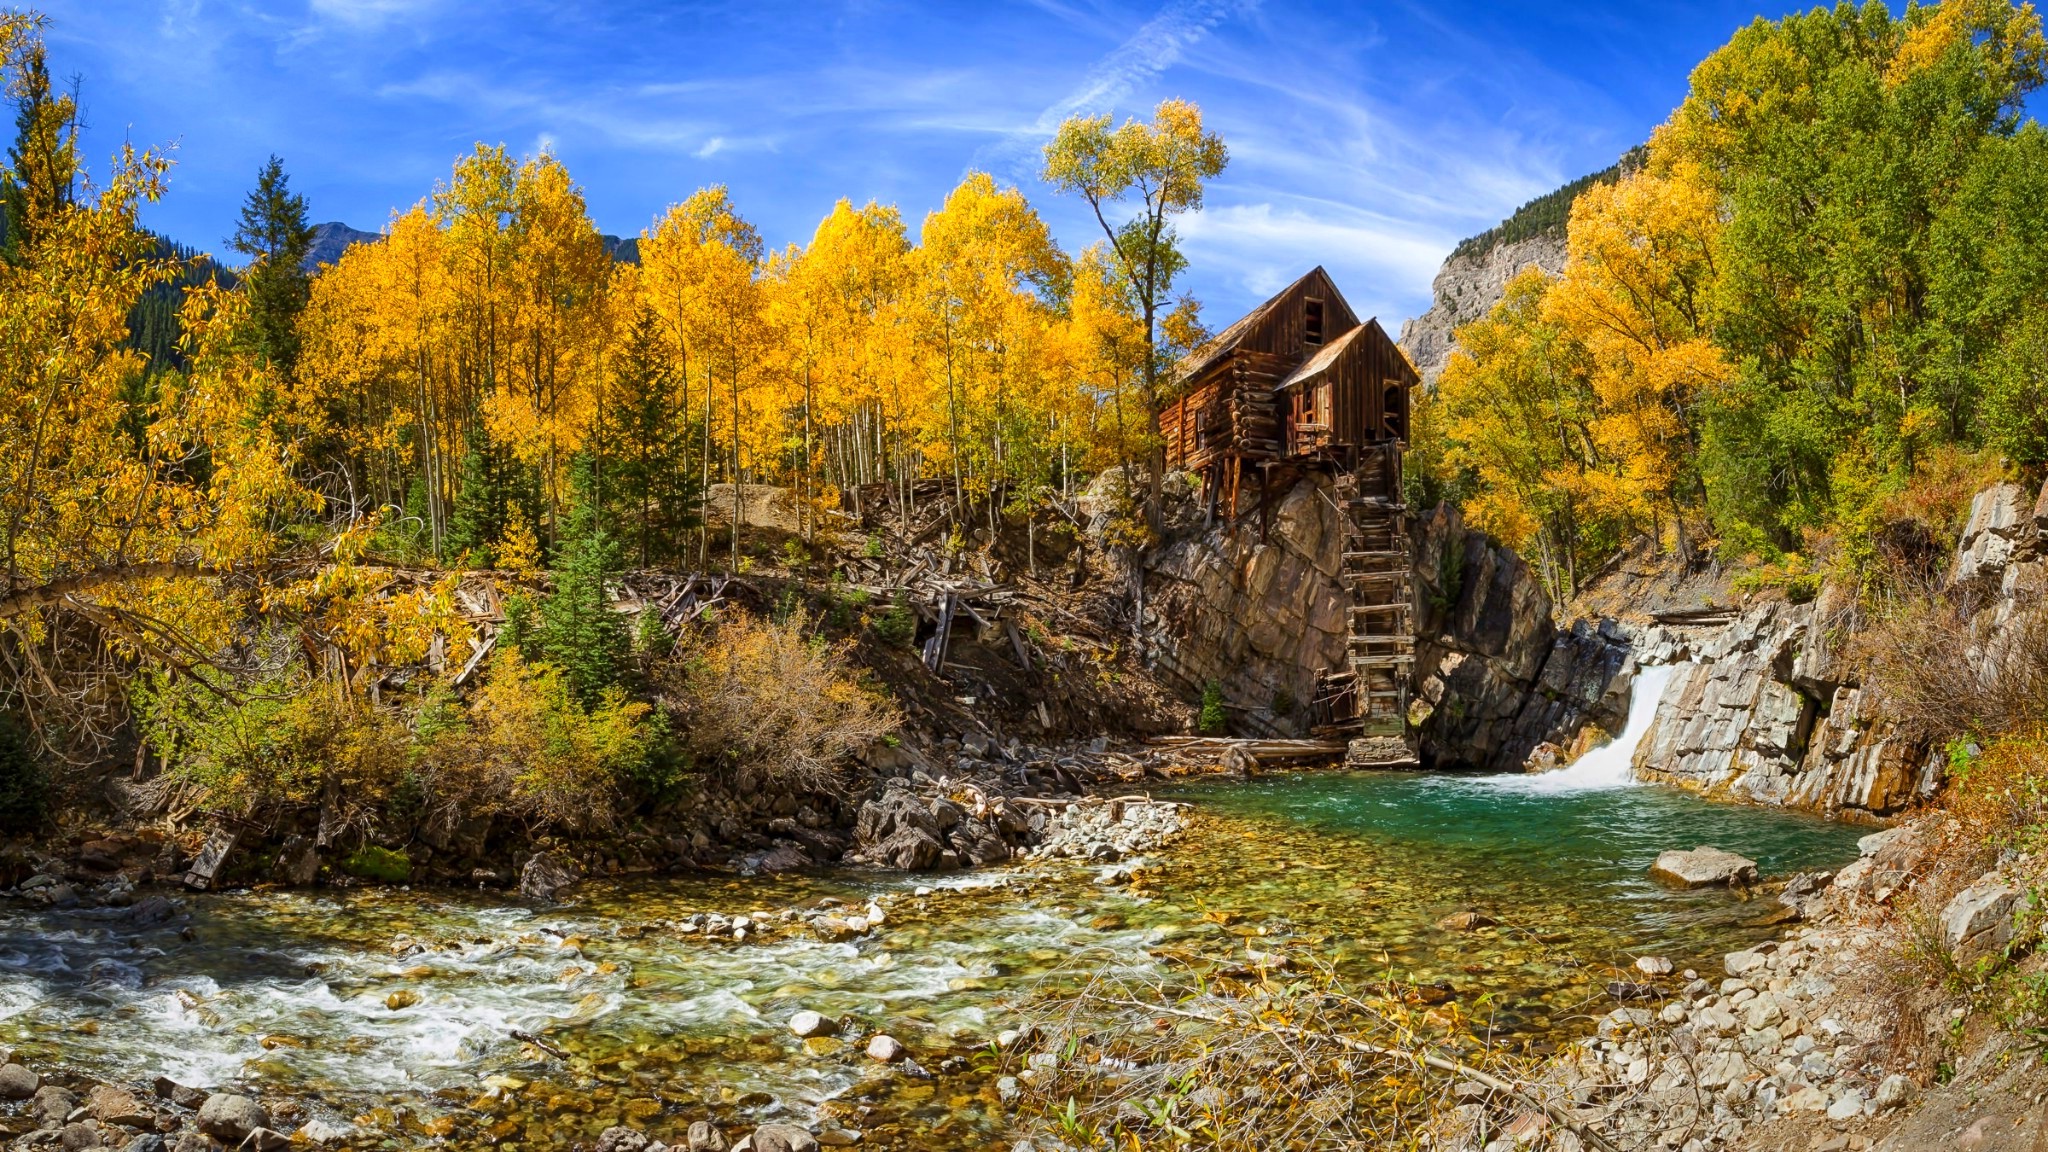 Fall Nature Mill River Forest Landscape Colorado